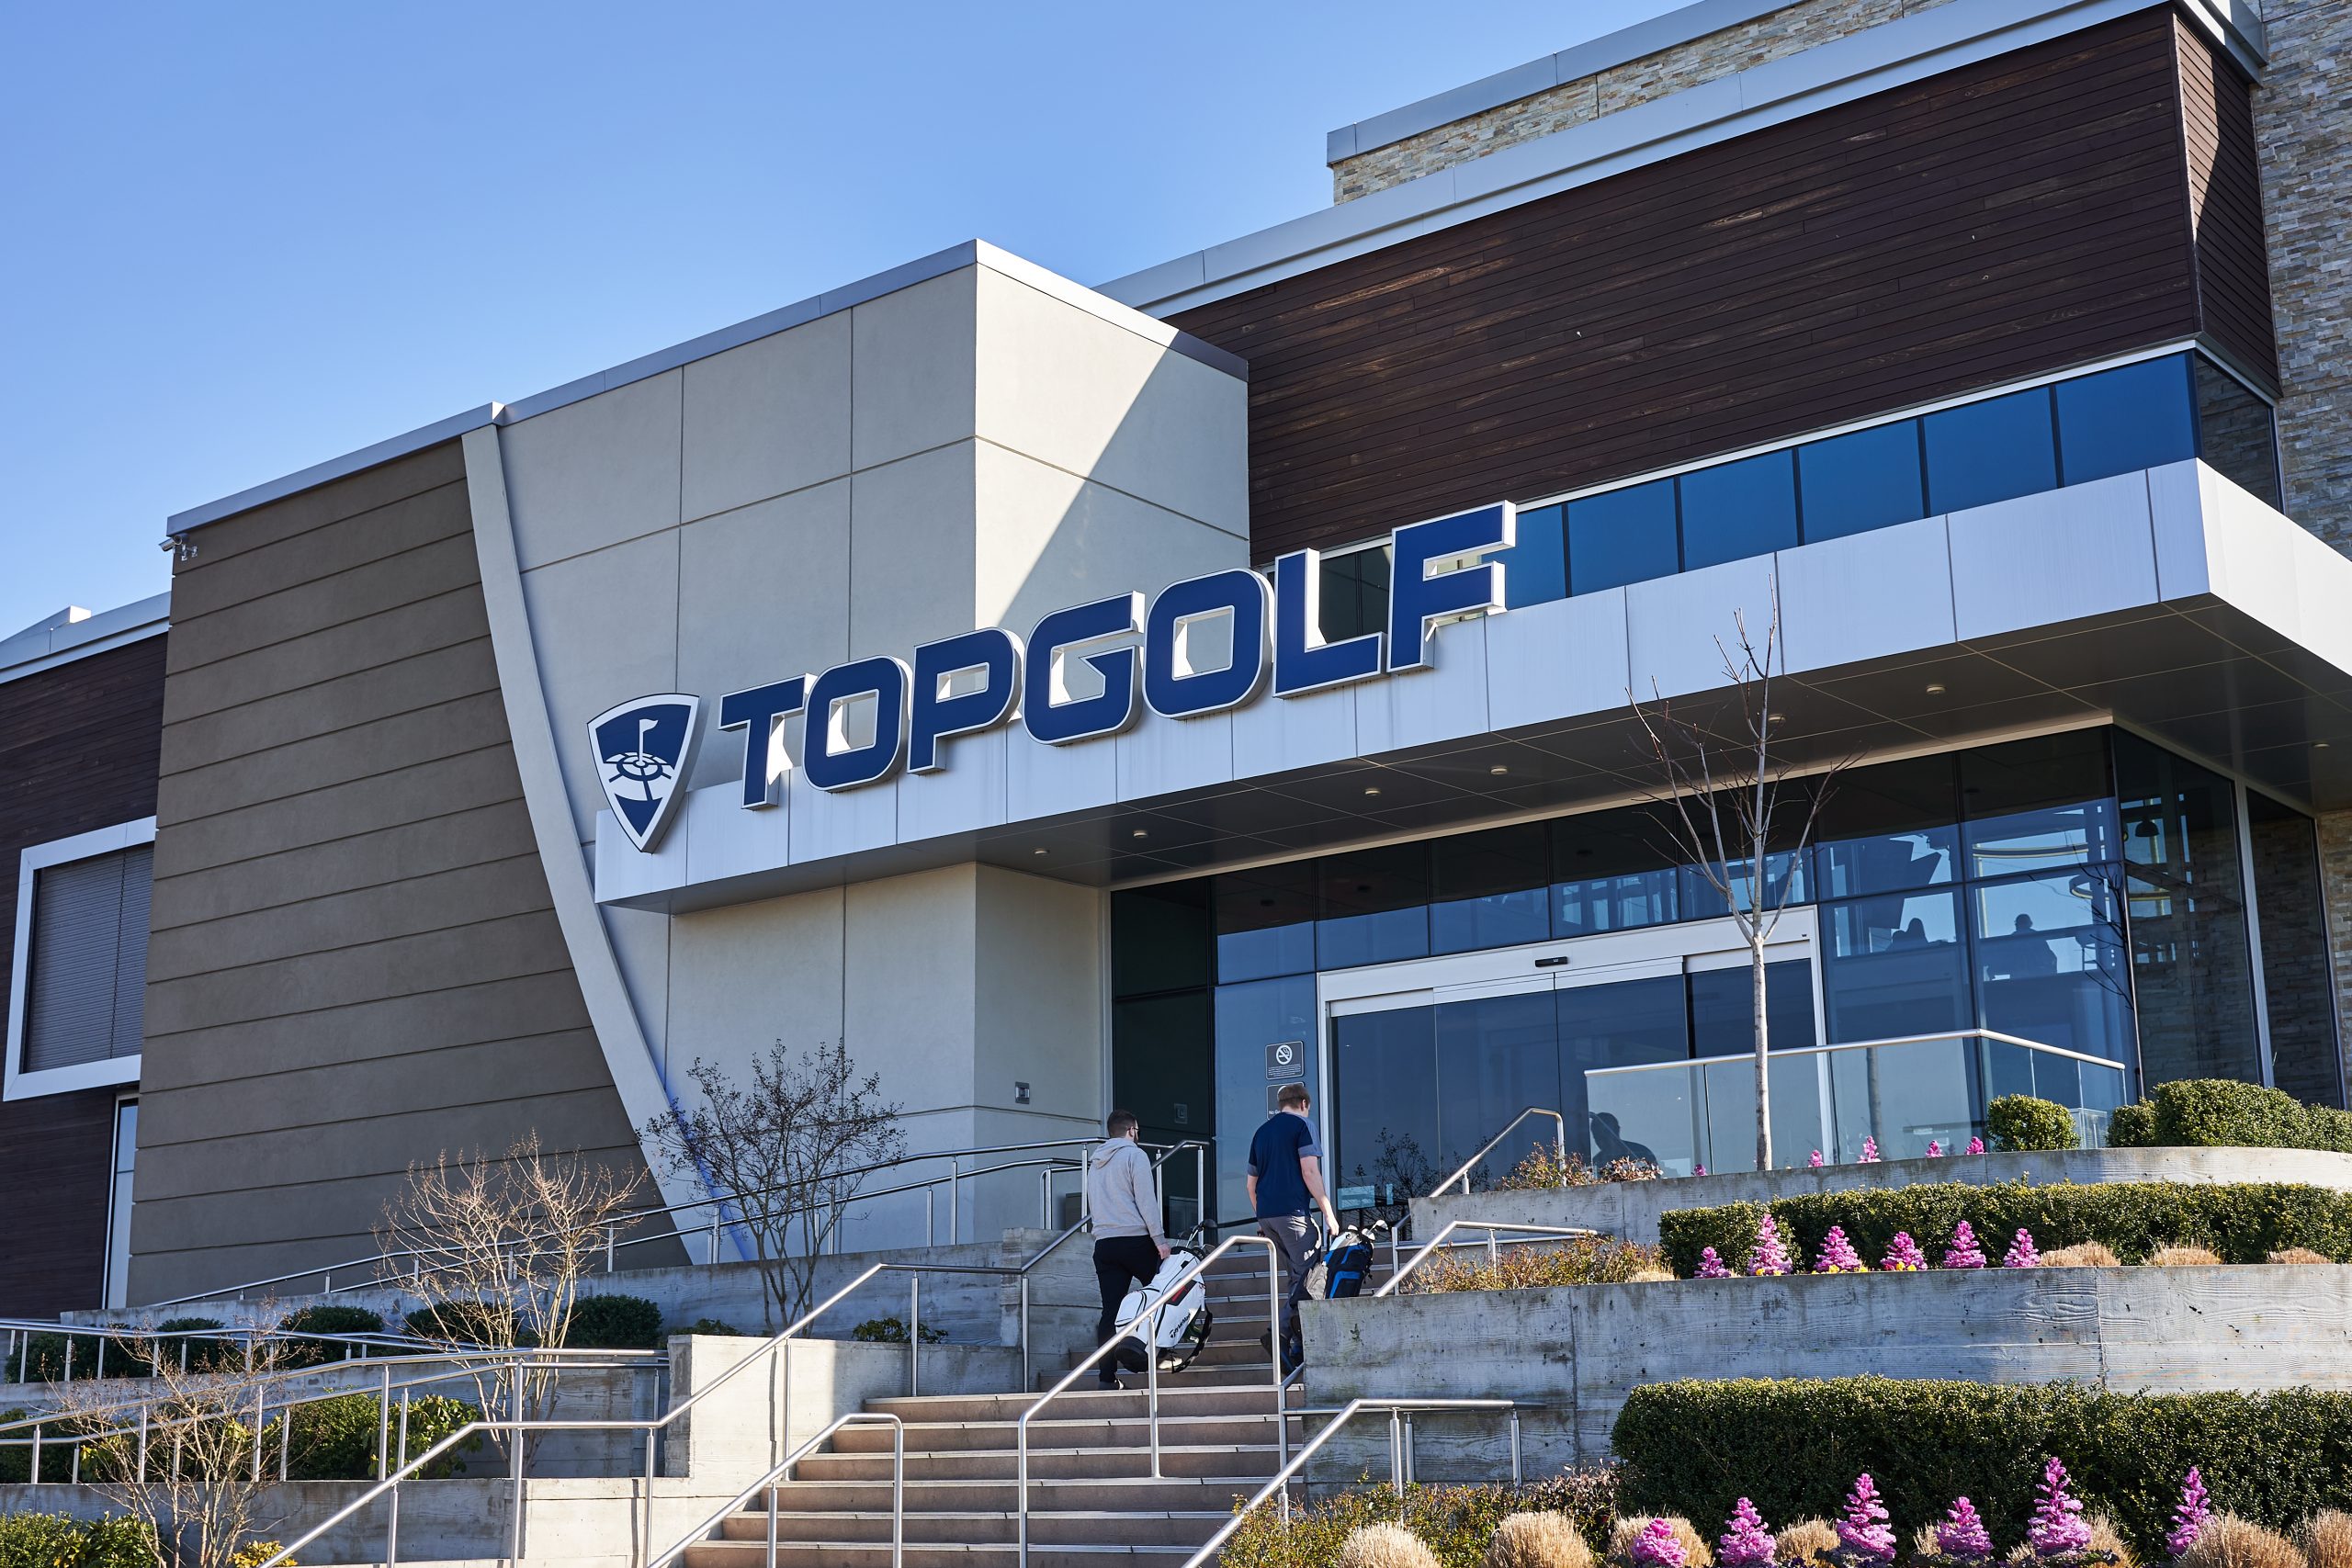 Hillsboro, OR, USA - Feb 21, 2020: Golfers entering a branch on the sports entertainment company Topgolf International's driving-range chain in Hillsboro, a suburb within the Portland metro area in Oregon.